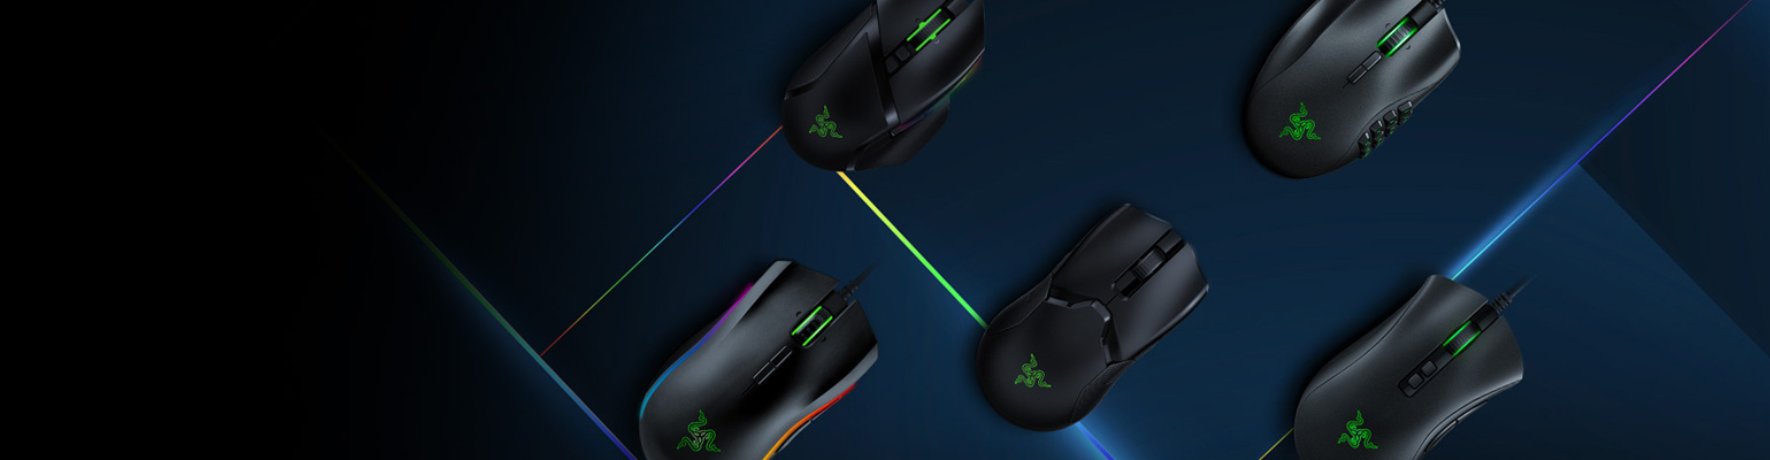 Razer Cobra Pro - Souris de Gaming sans fil légère avec Razer Chroma RGB